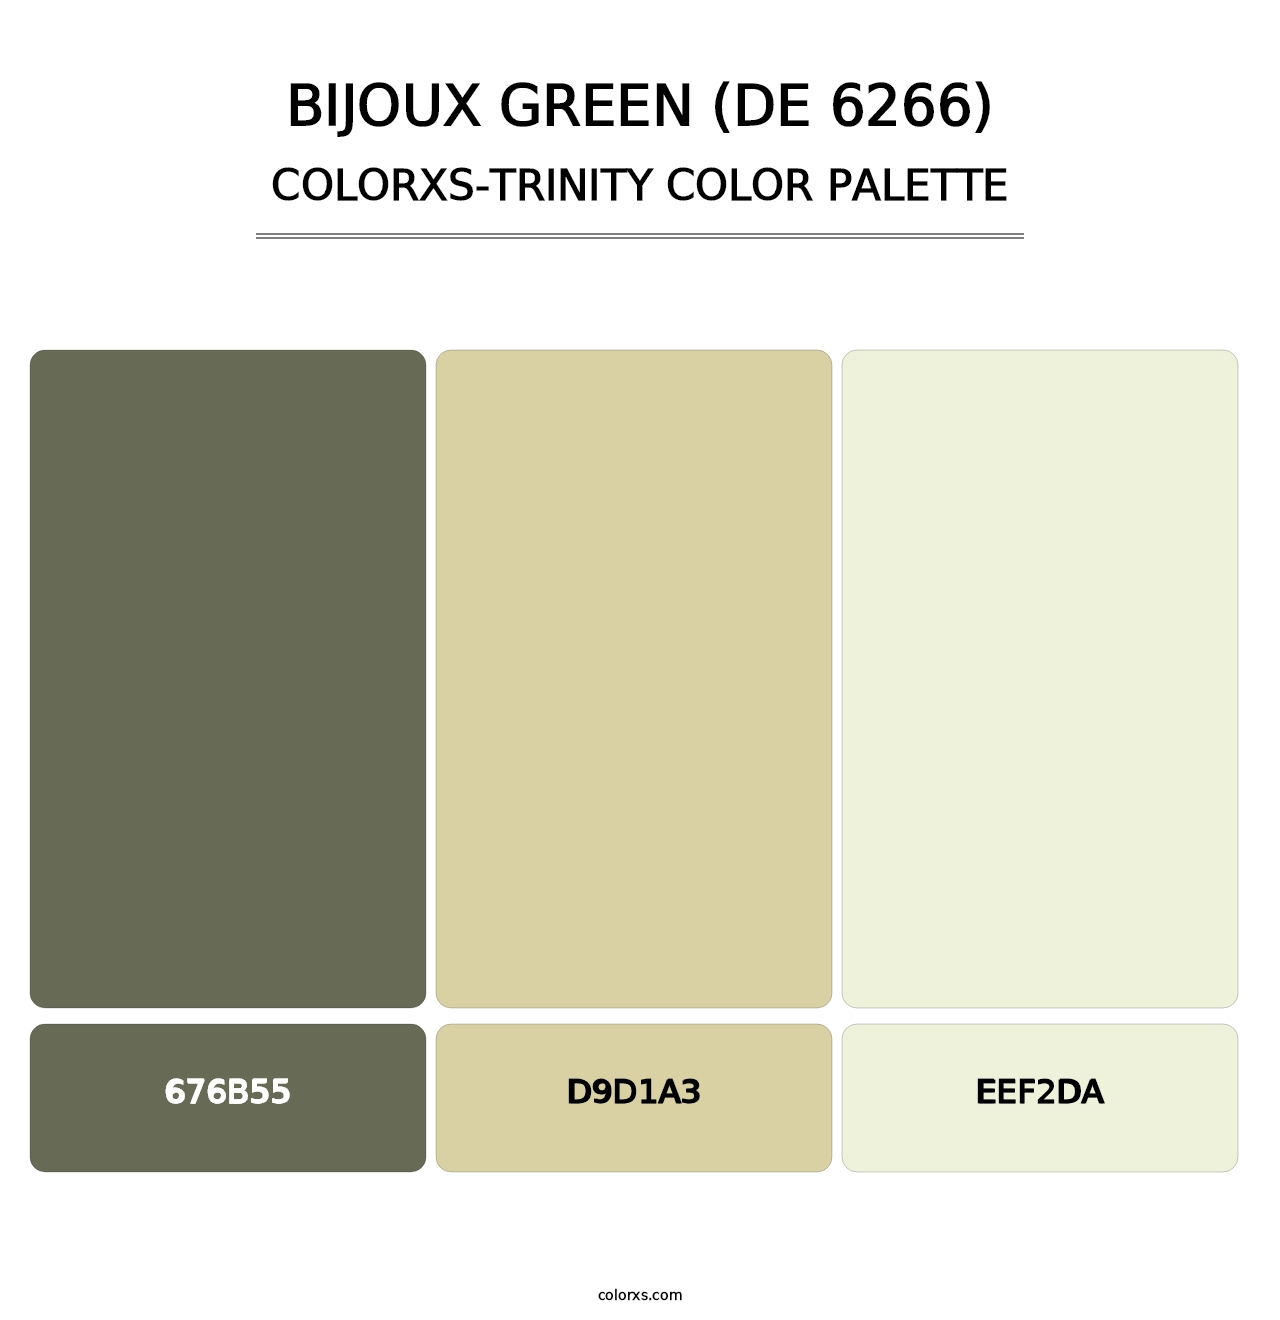 Bijoux Green (DE 6266) - Colorxs Trinity Palette